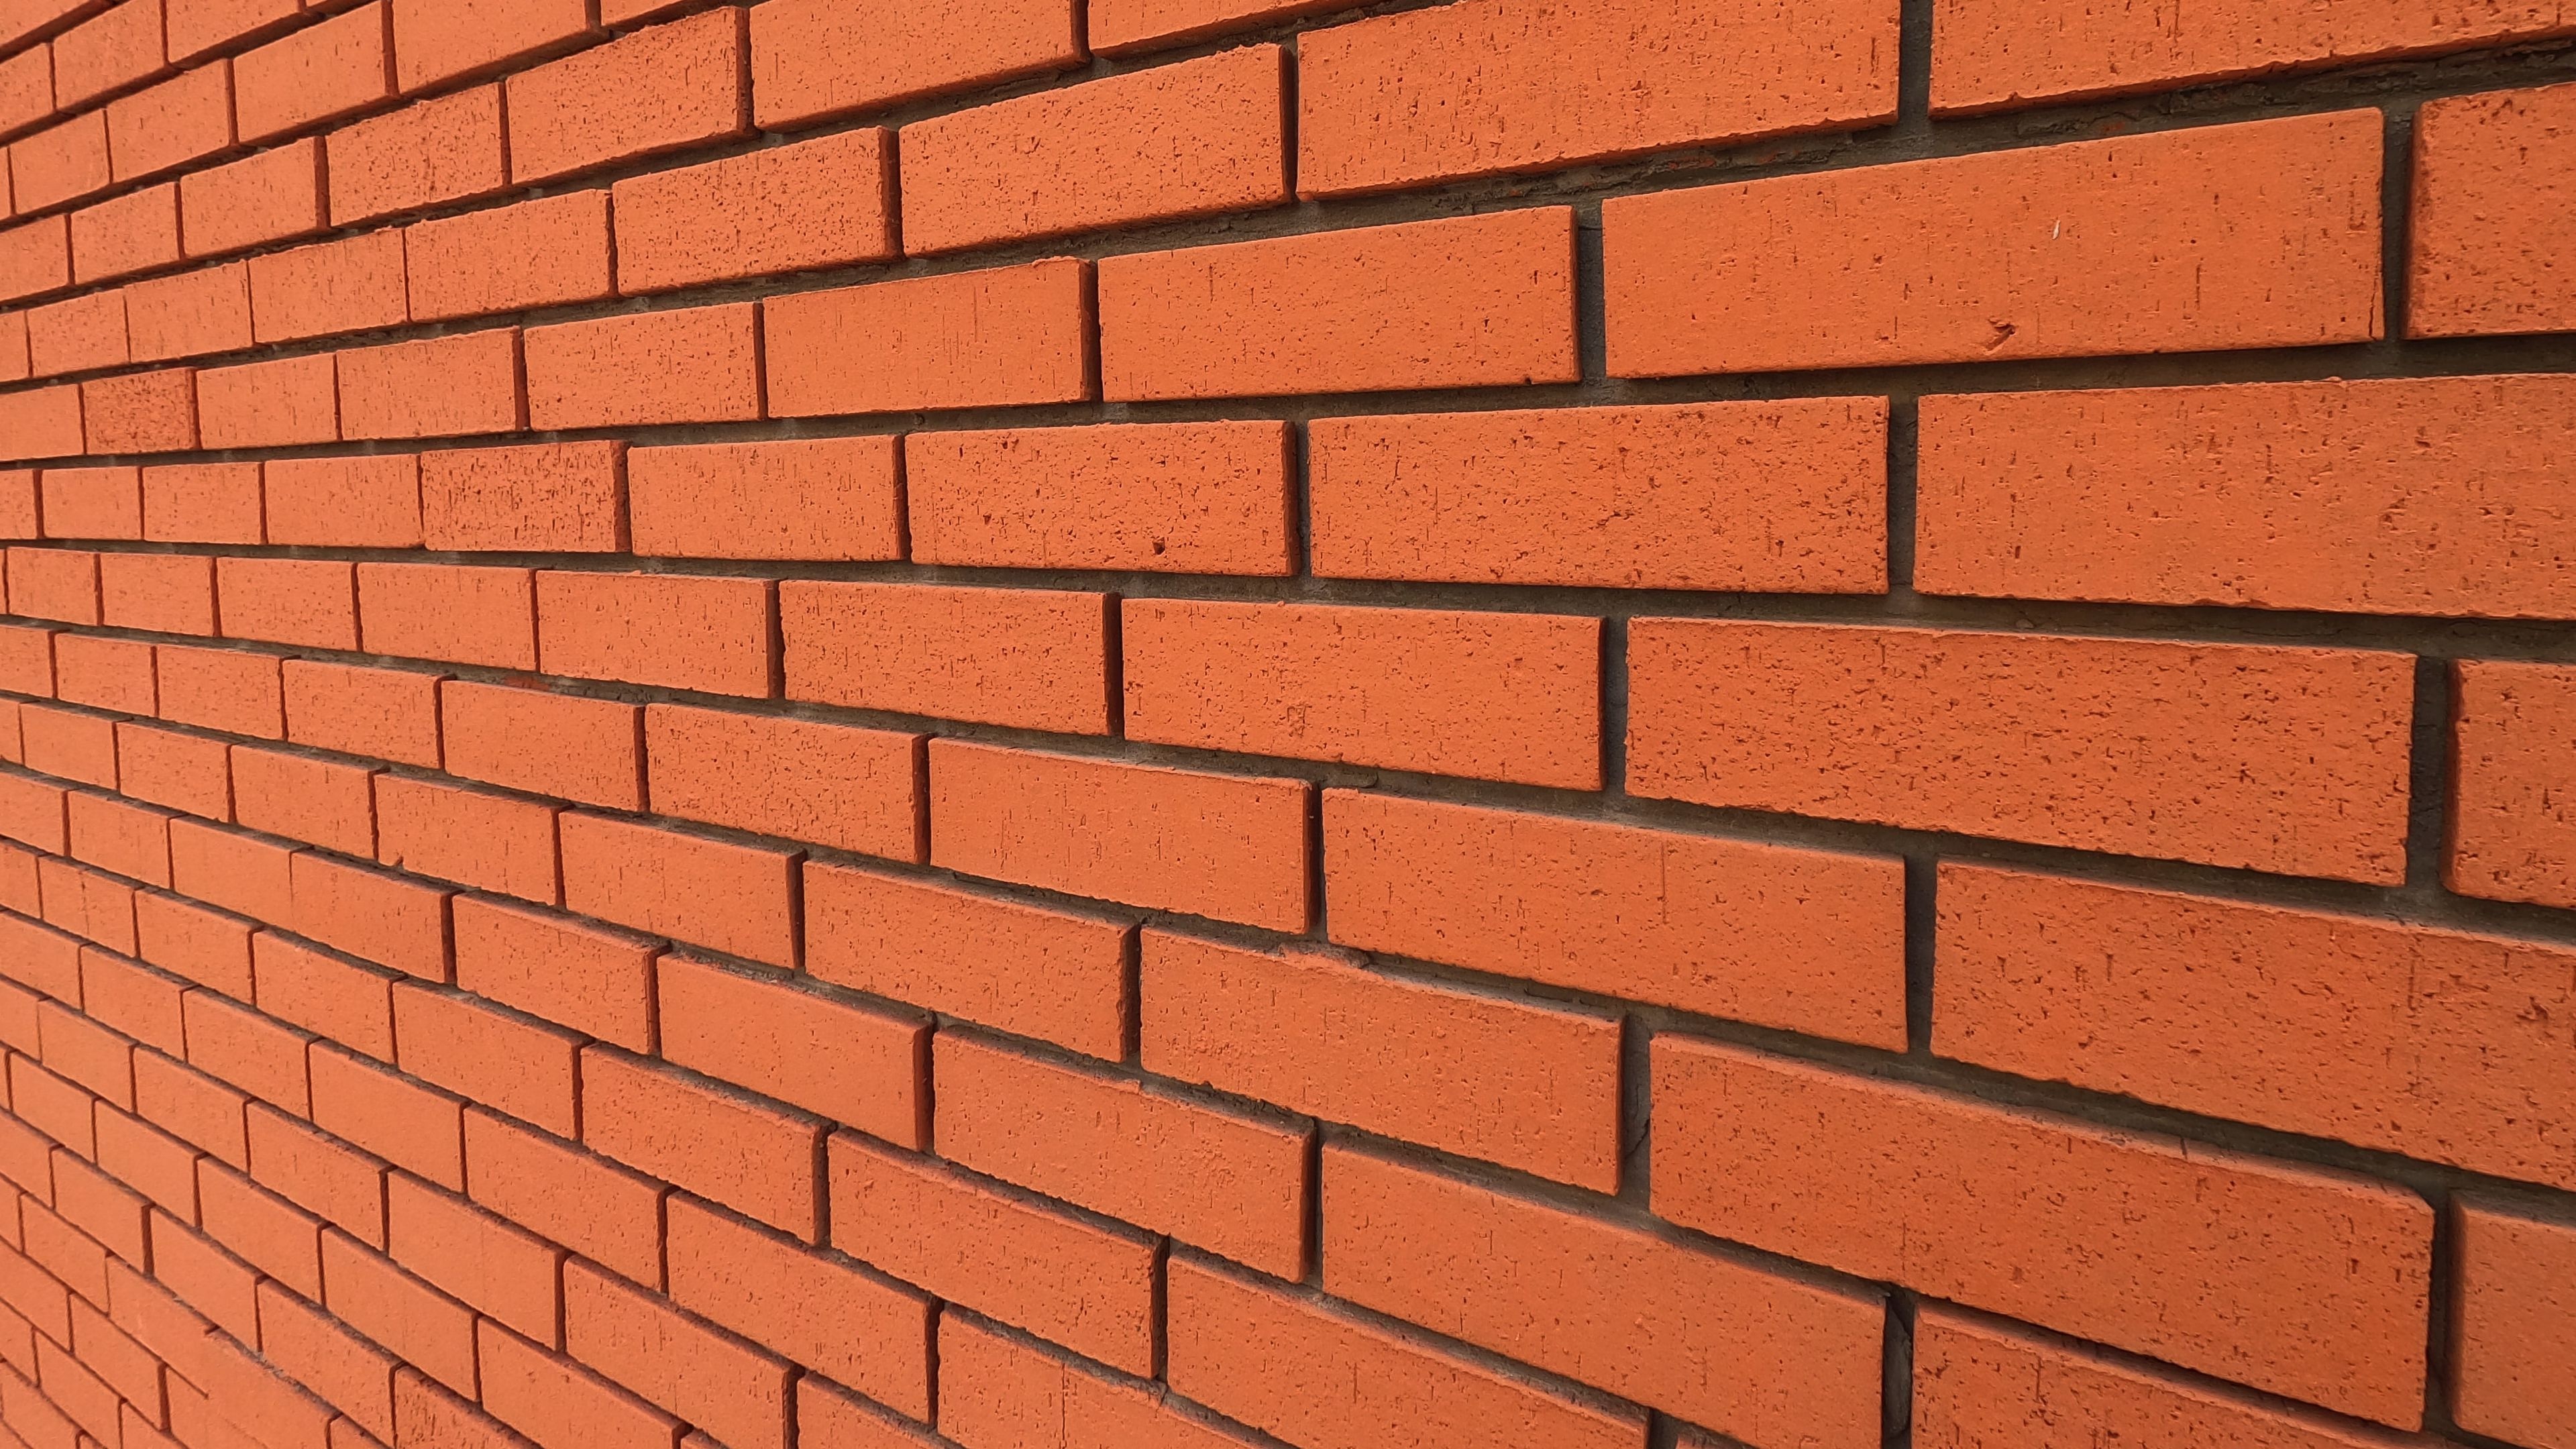 Brick wall, Red bricks, Textured surface, Striking appearance, 3840x2160 4K Desktop